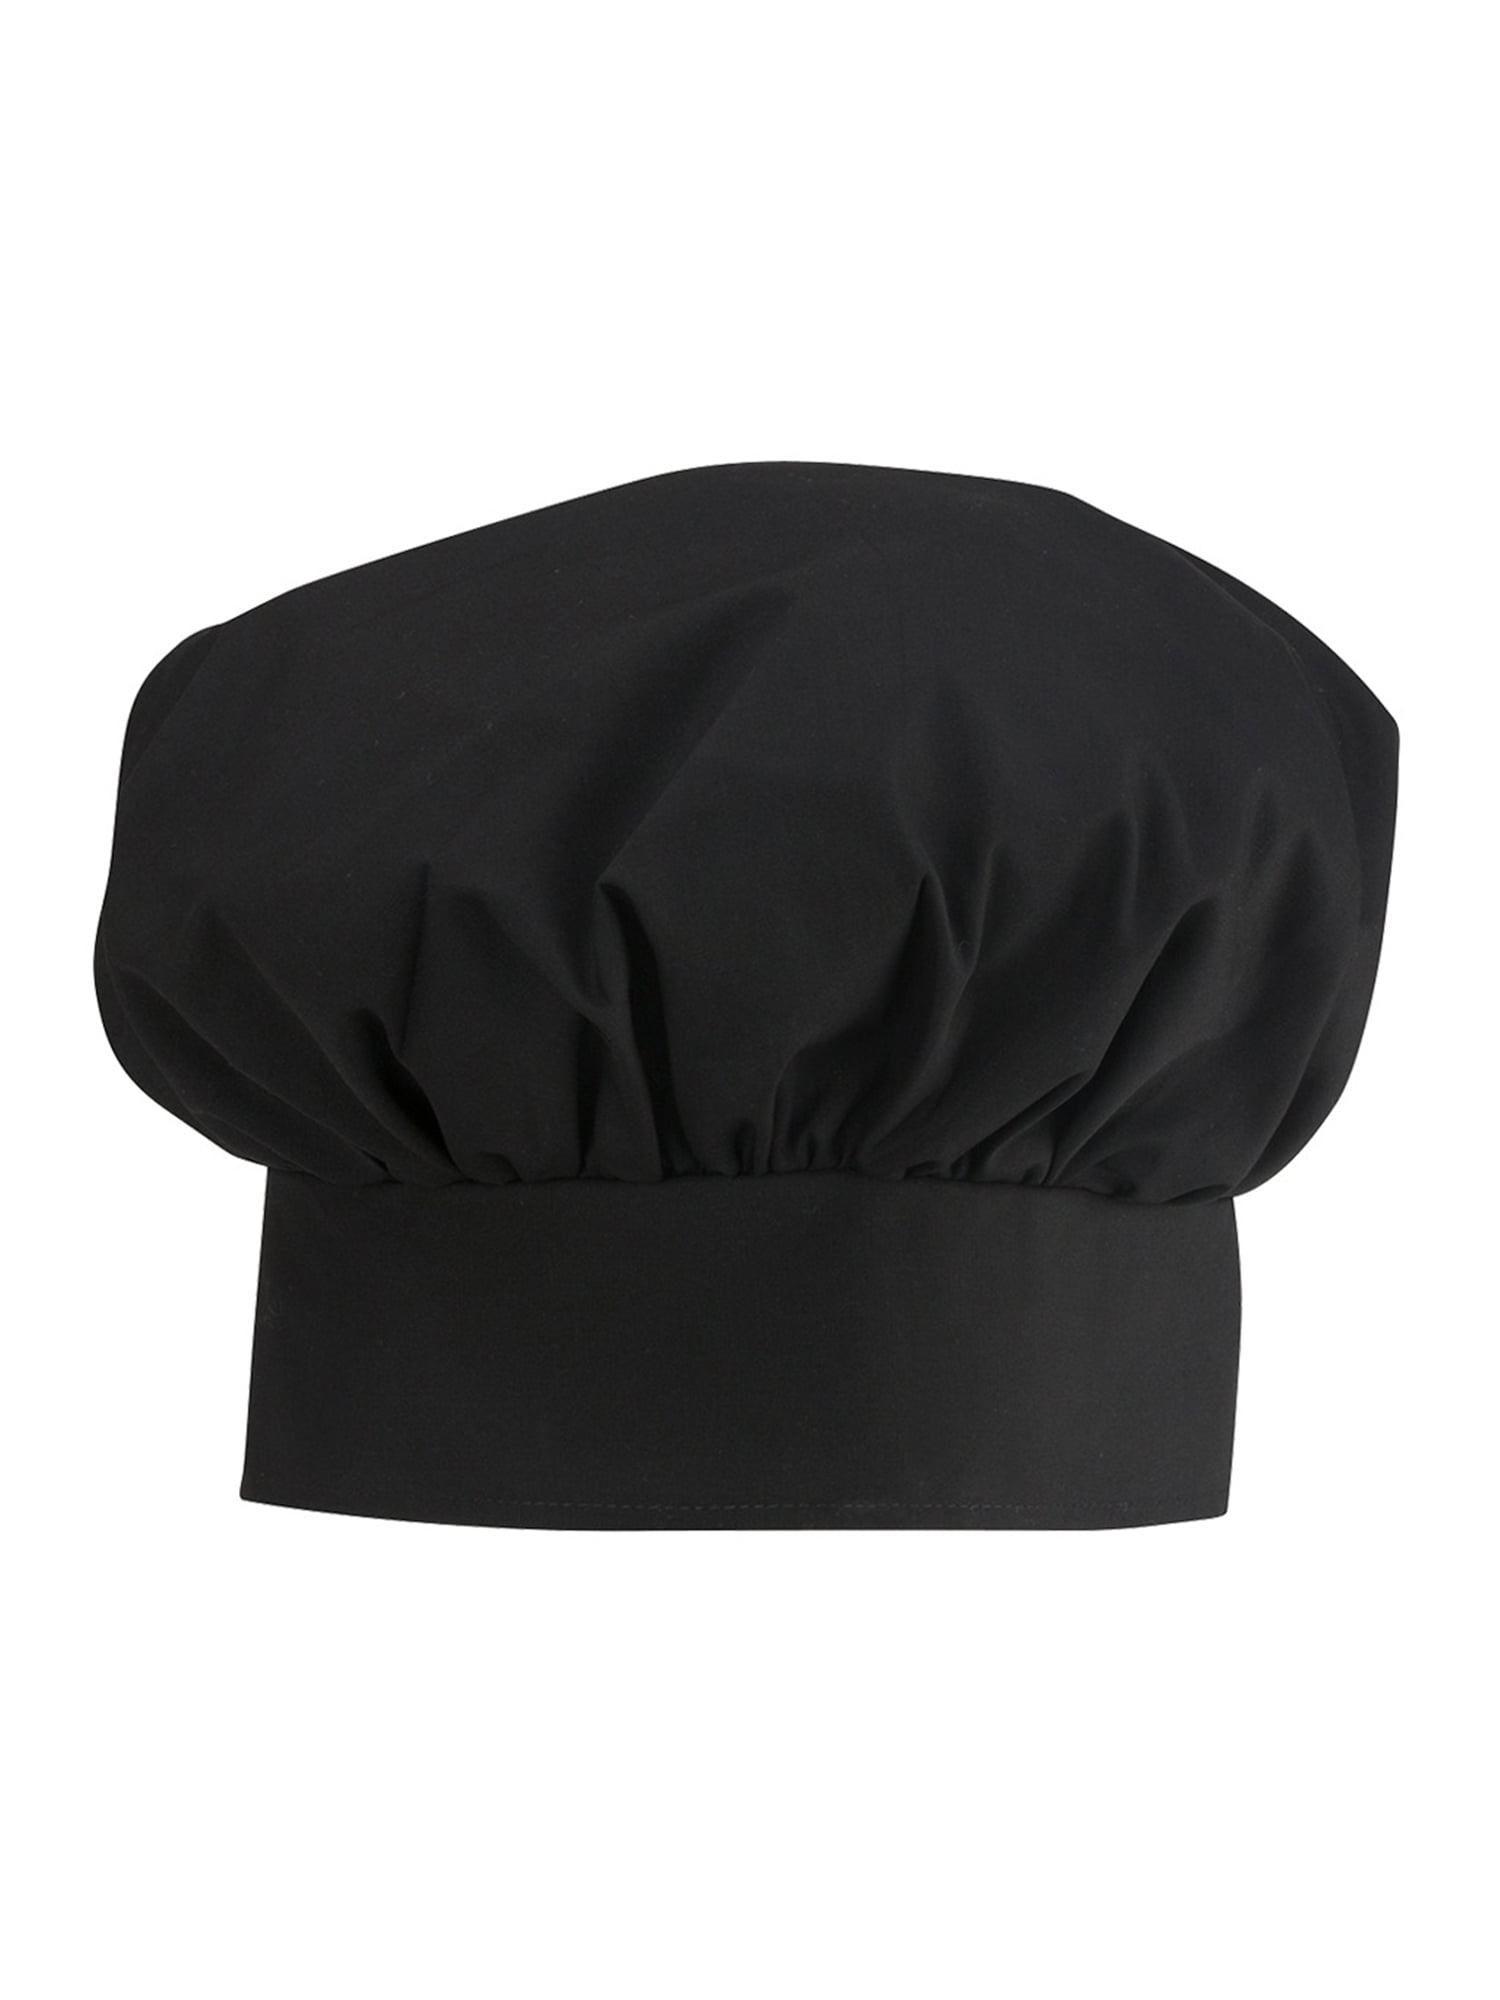 Adult Adjustable Chef Hat Mesh Kitchen Cooking Hat Restaurant Chef SkullYEUS 